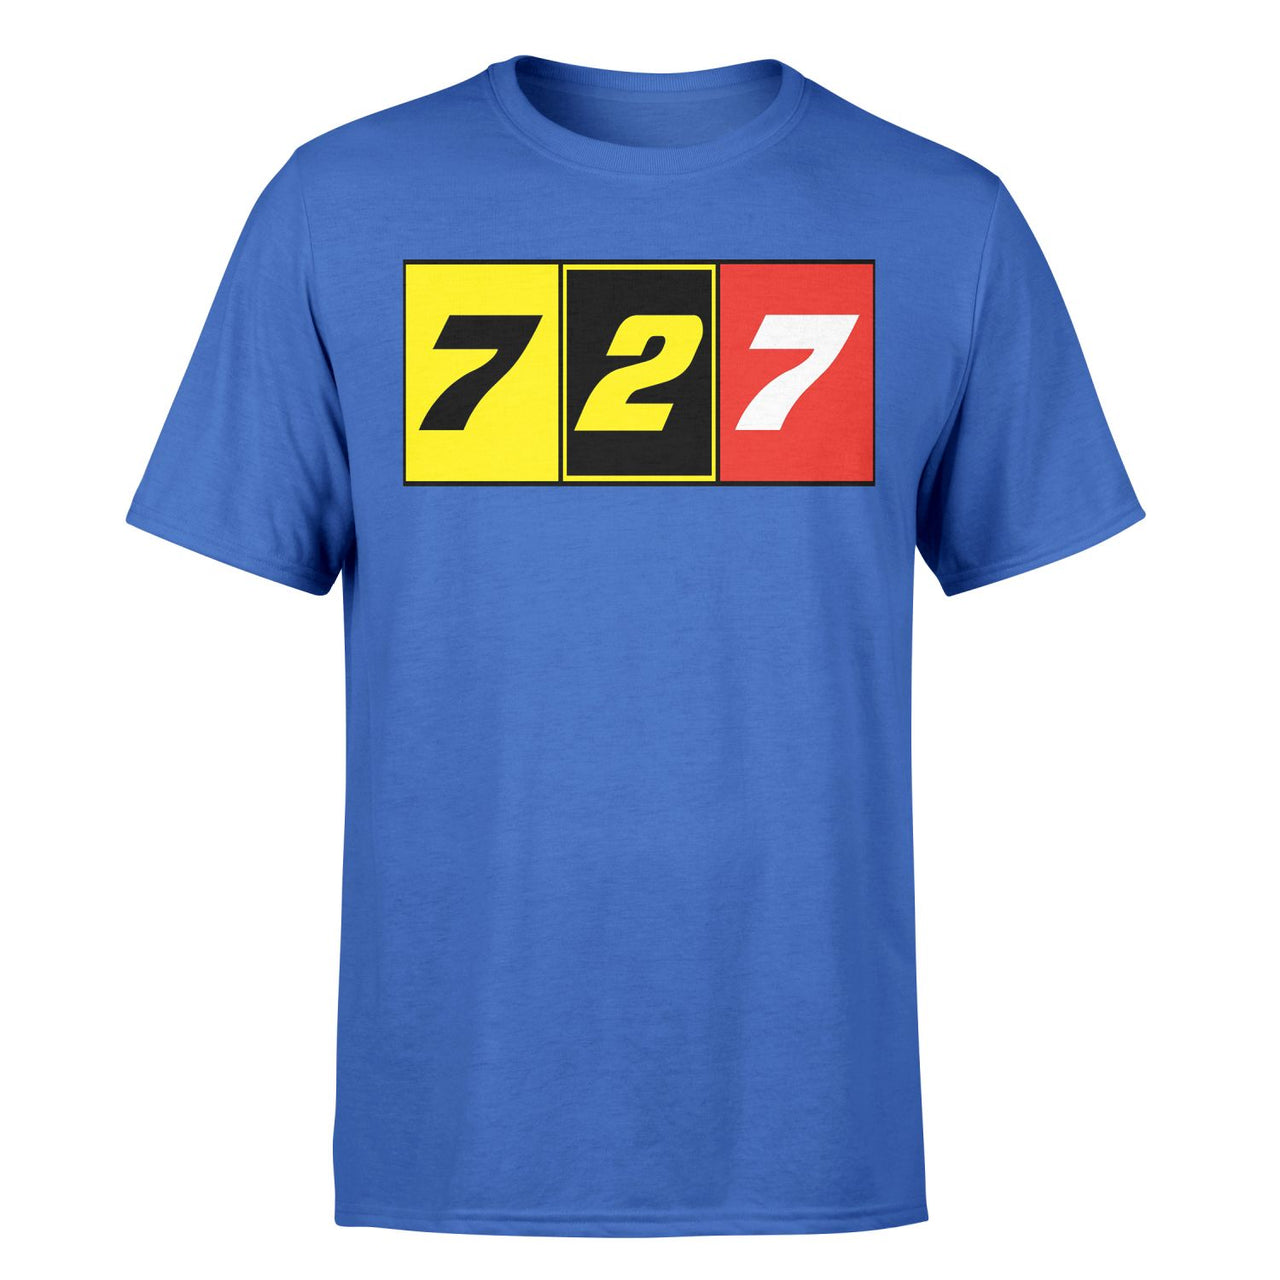 Flat Colourful 727 Designed T-Shirts